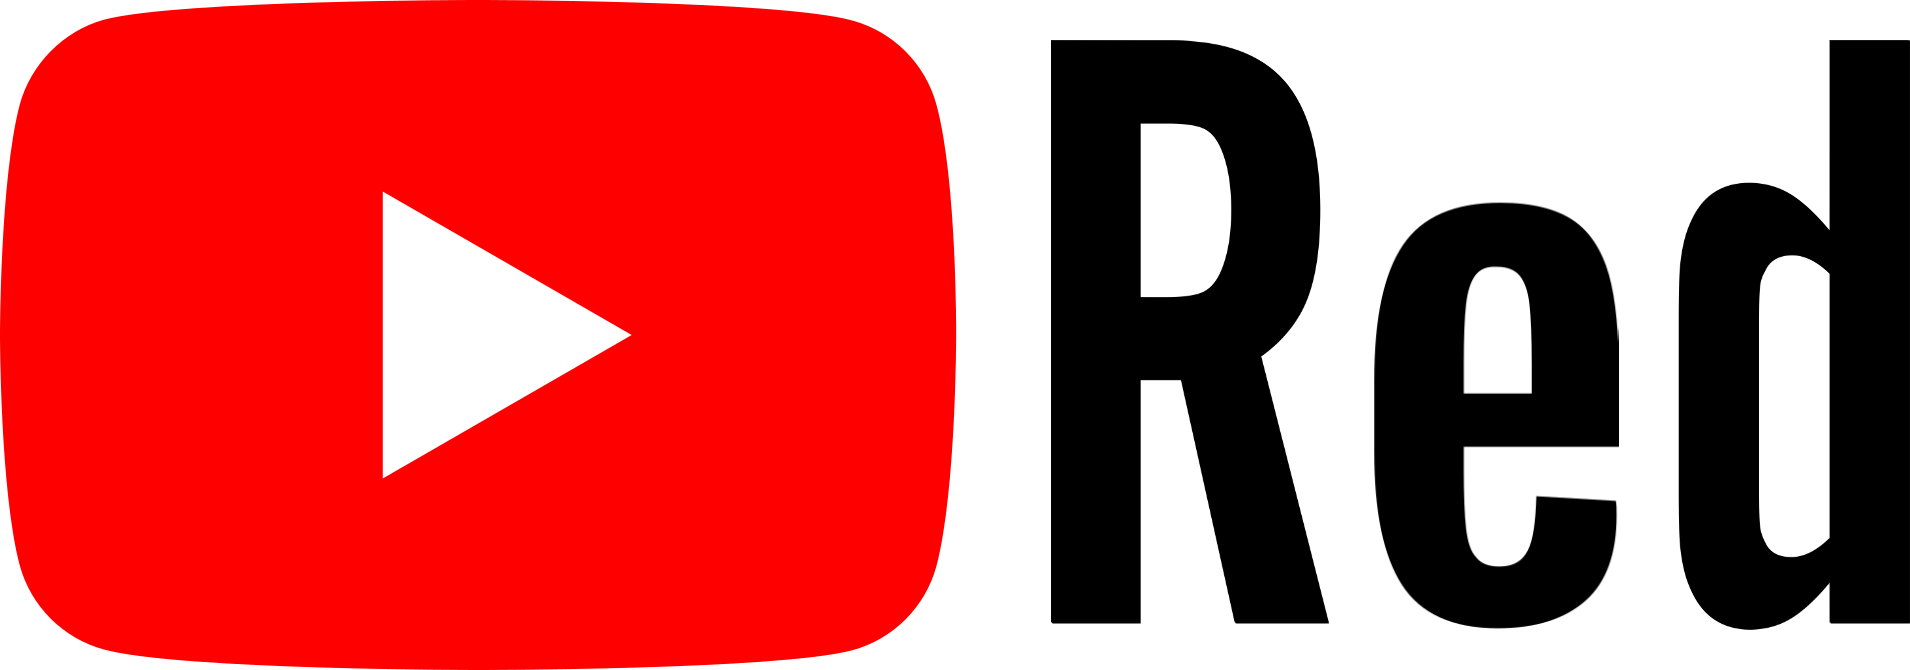 Youtube Red Logo-0 - Youtube Red Originals Logo (1910x670)